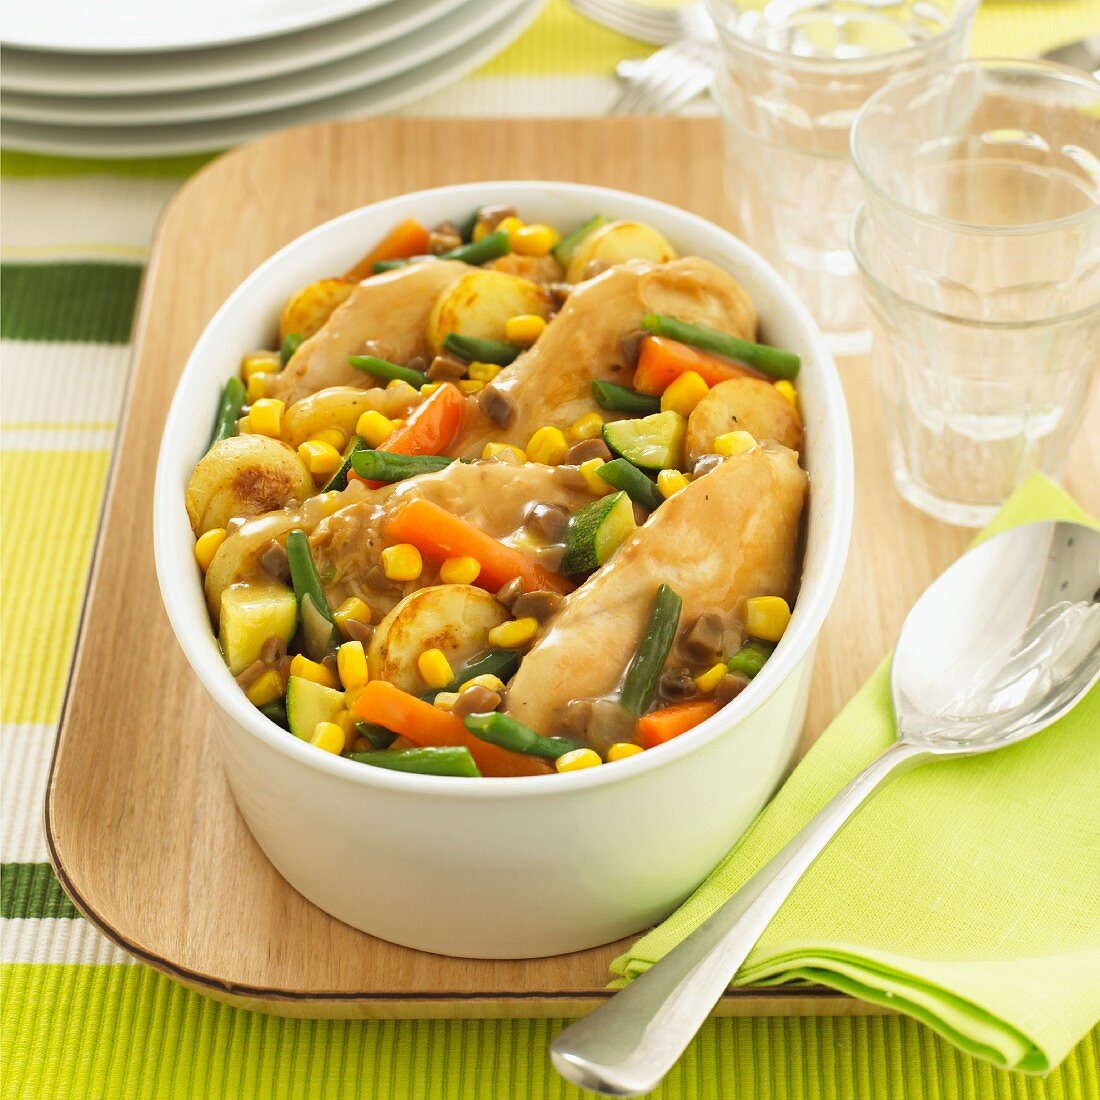 Hot Pot mit Huhn & Gemüse